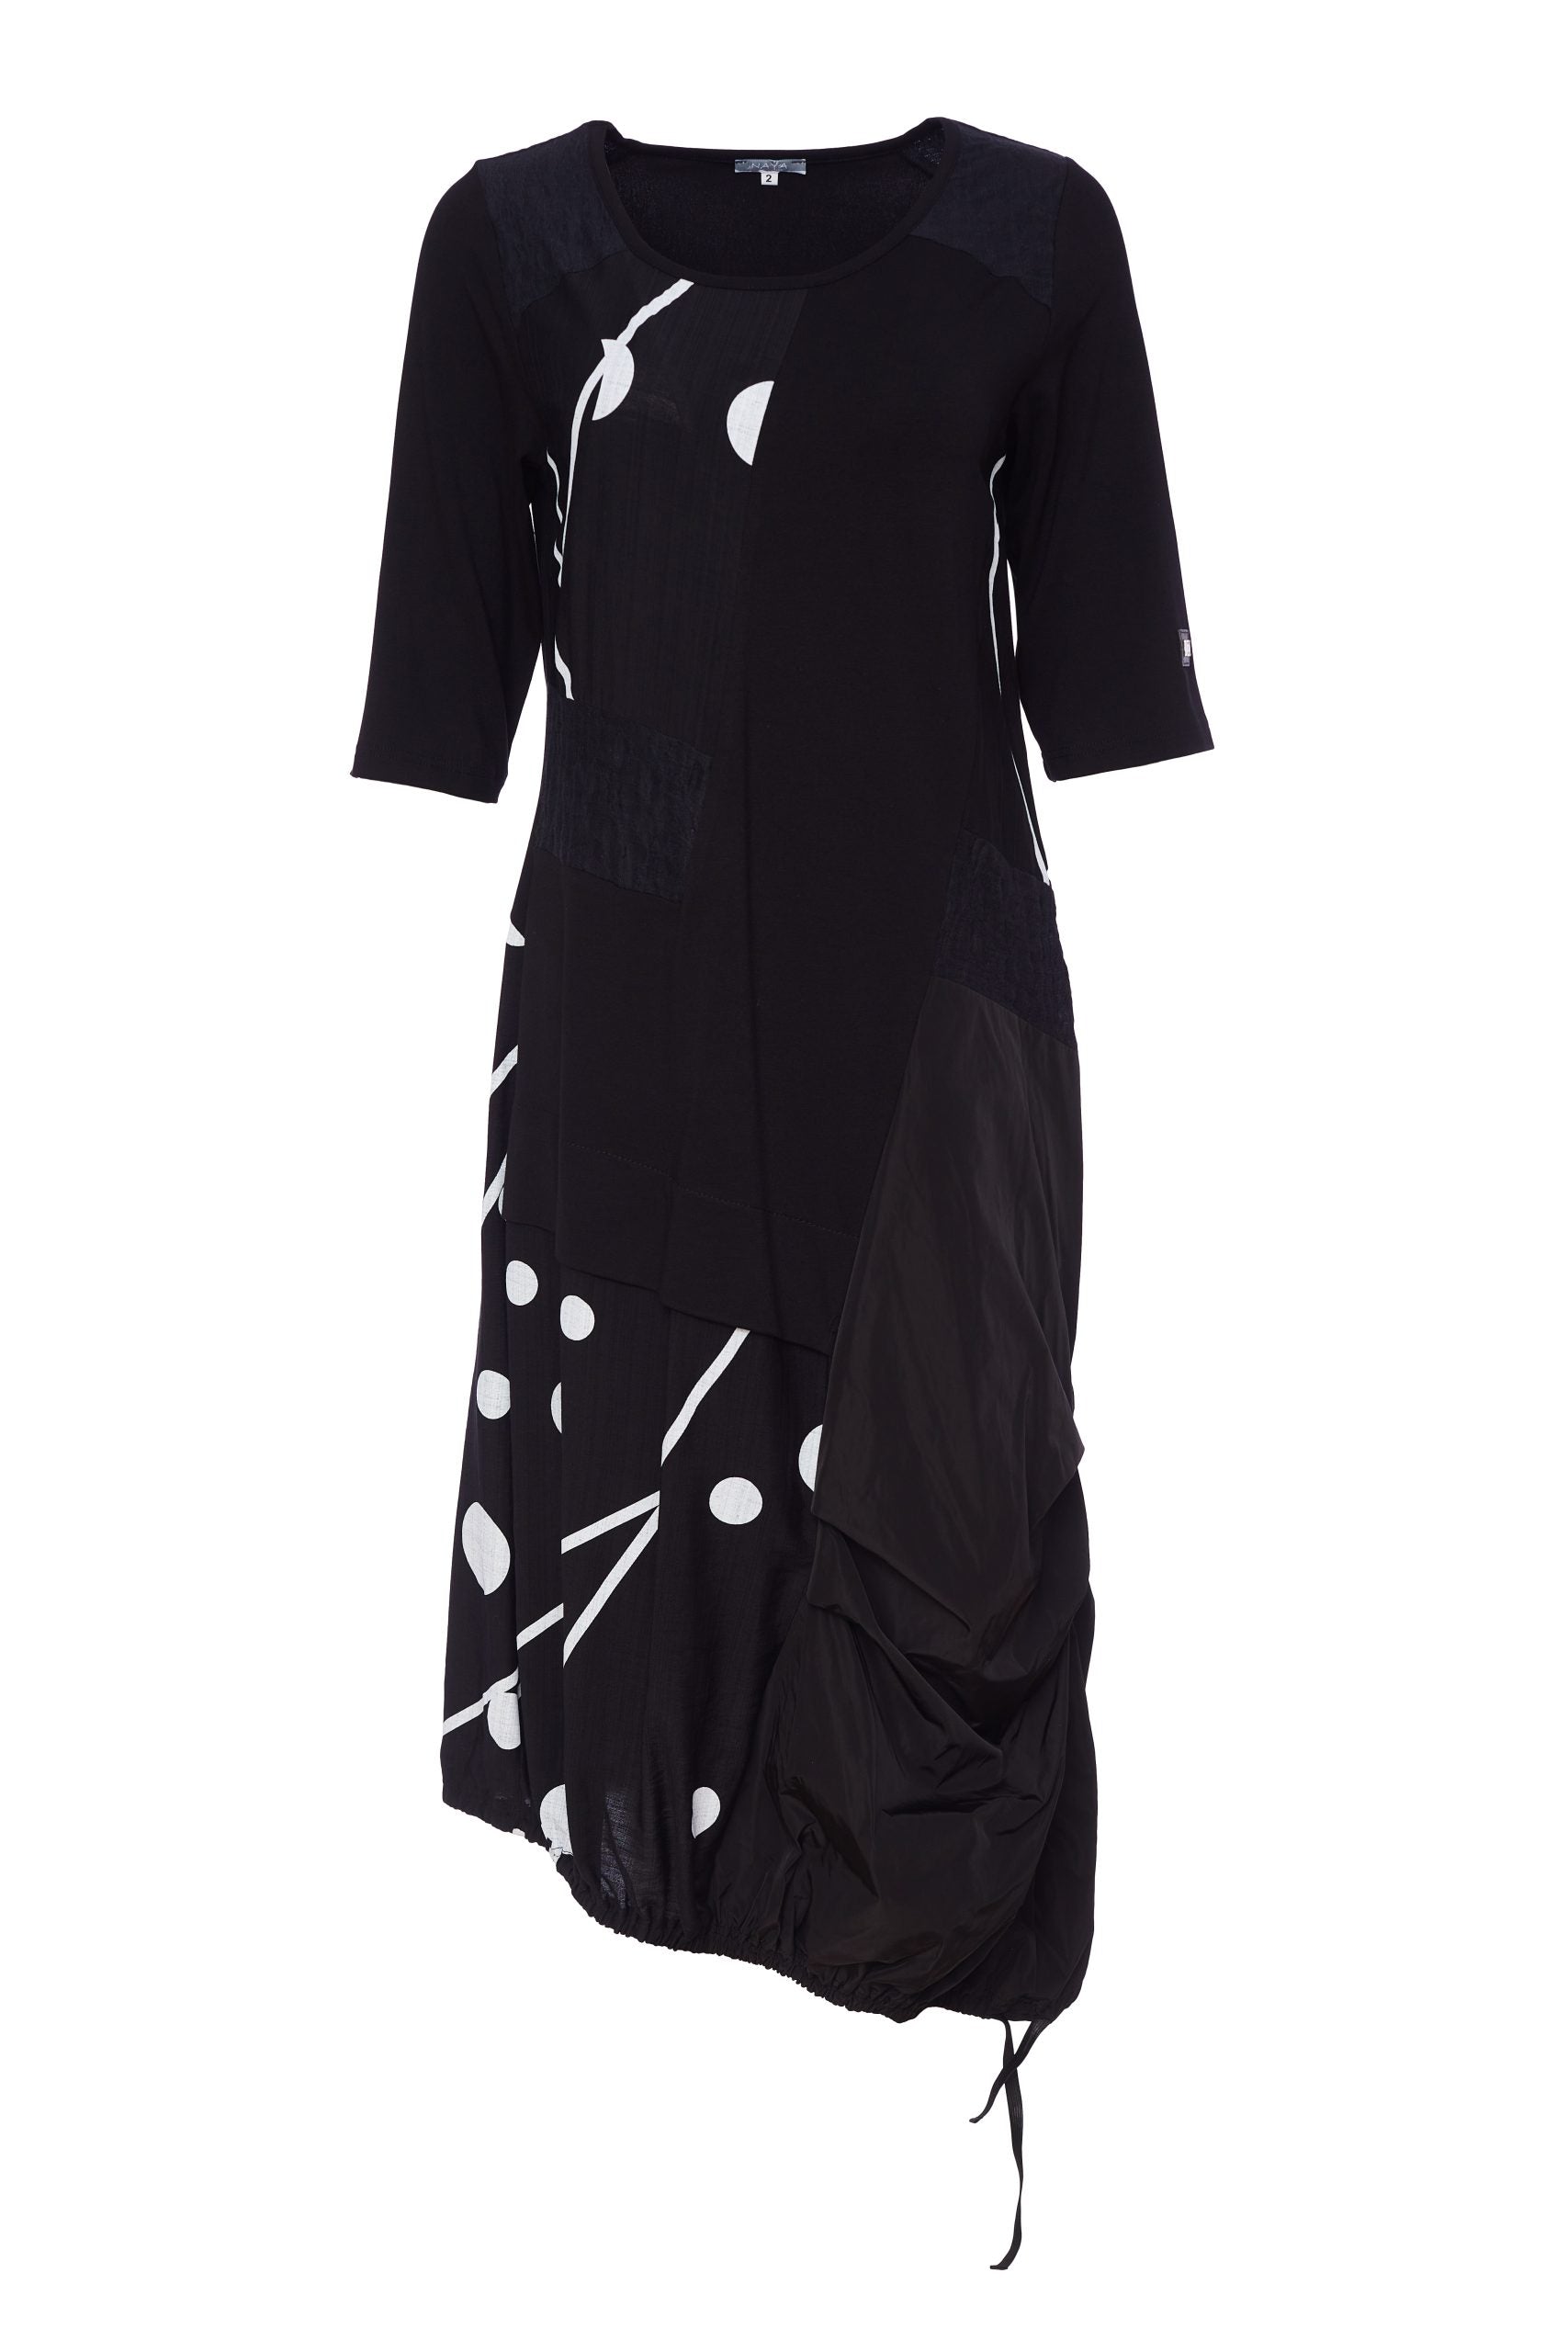 Black & White Spot Dress - NAS24239